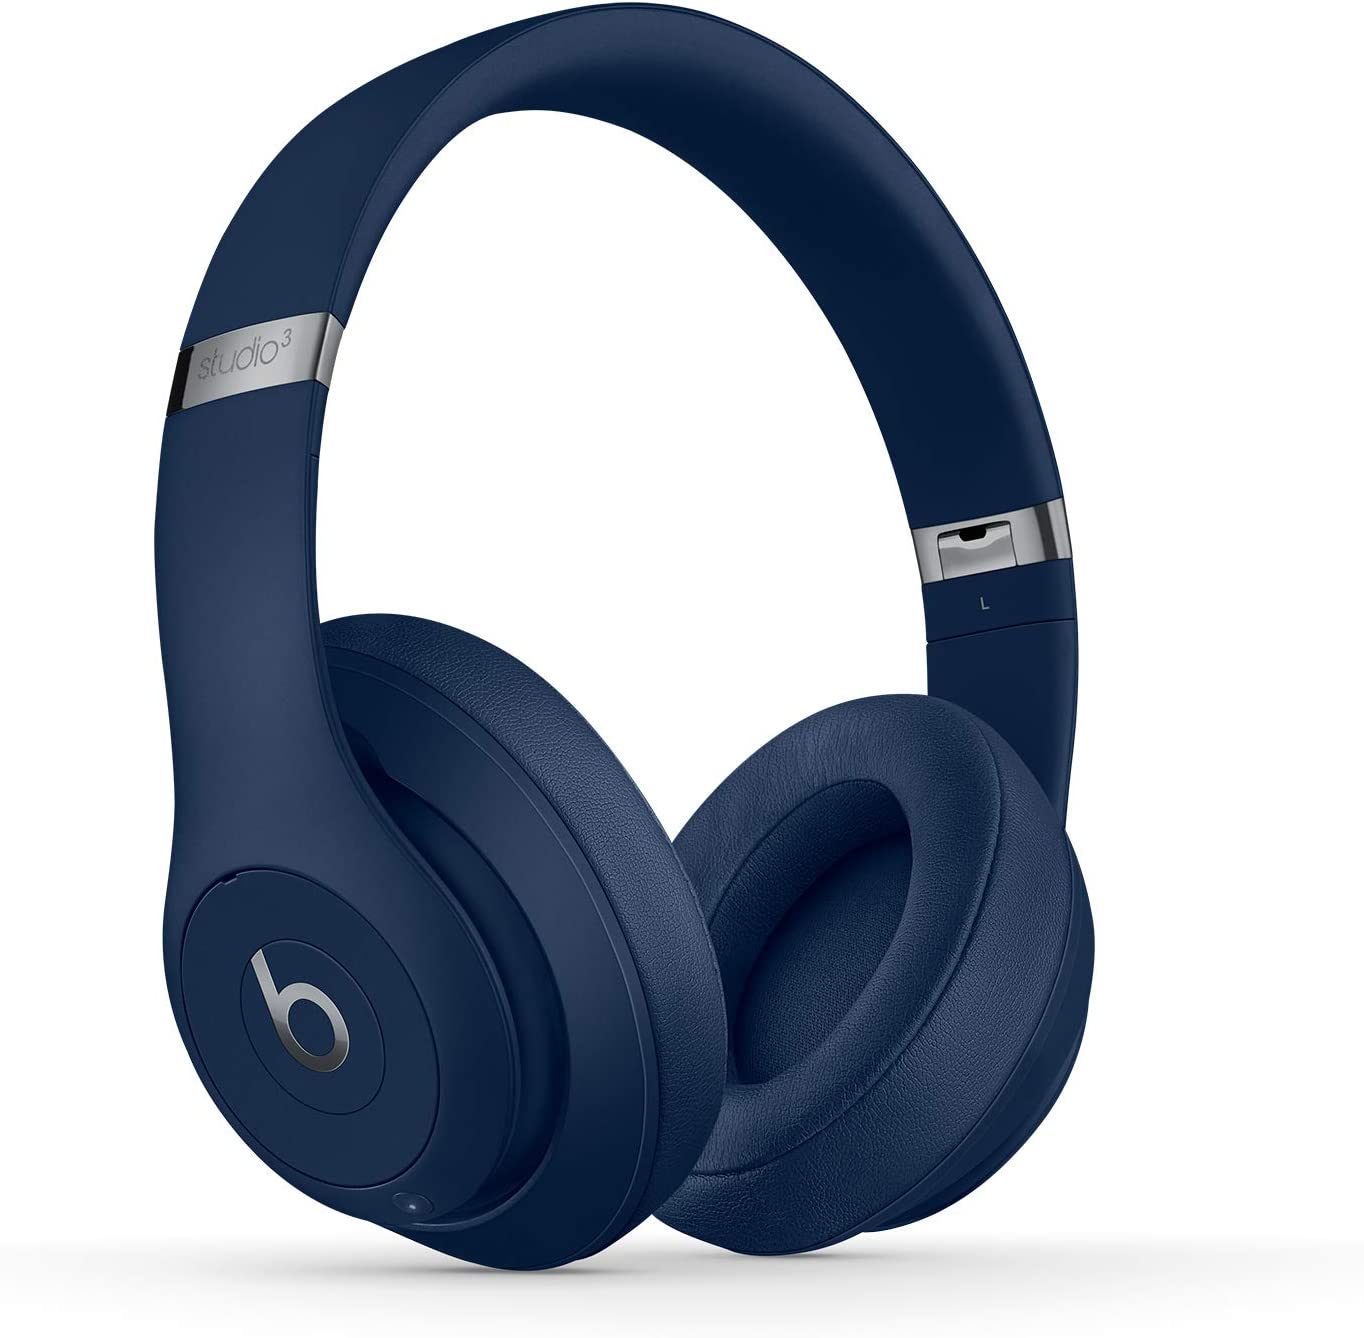  Beats Studio3 Wireless Noise Cancelling Over-Ear Headphones